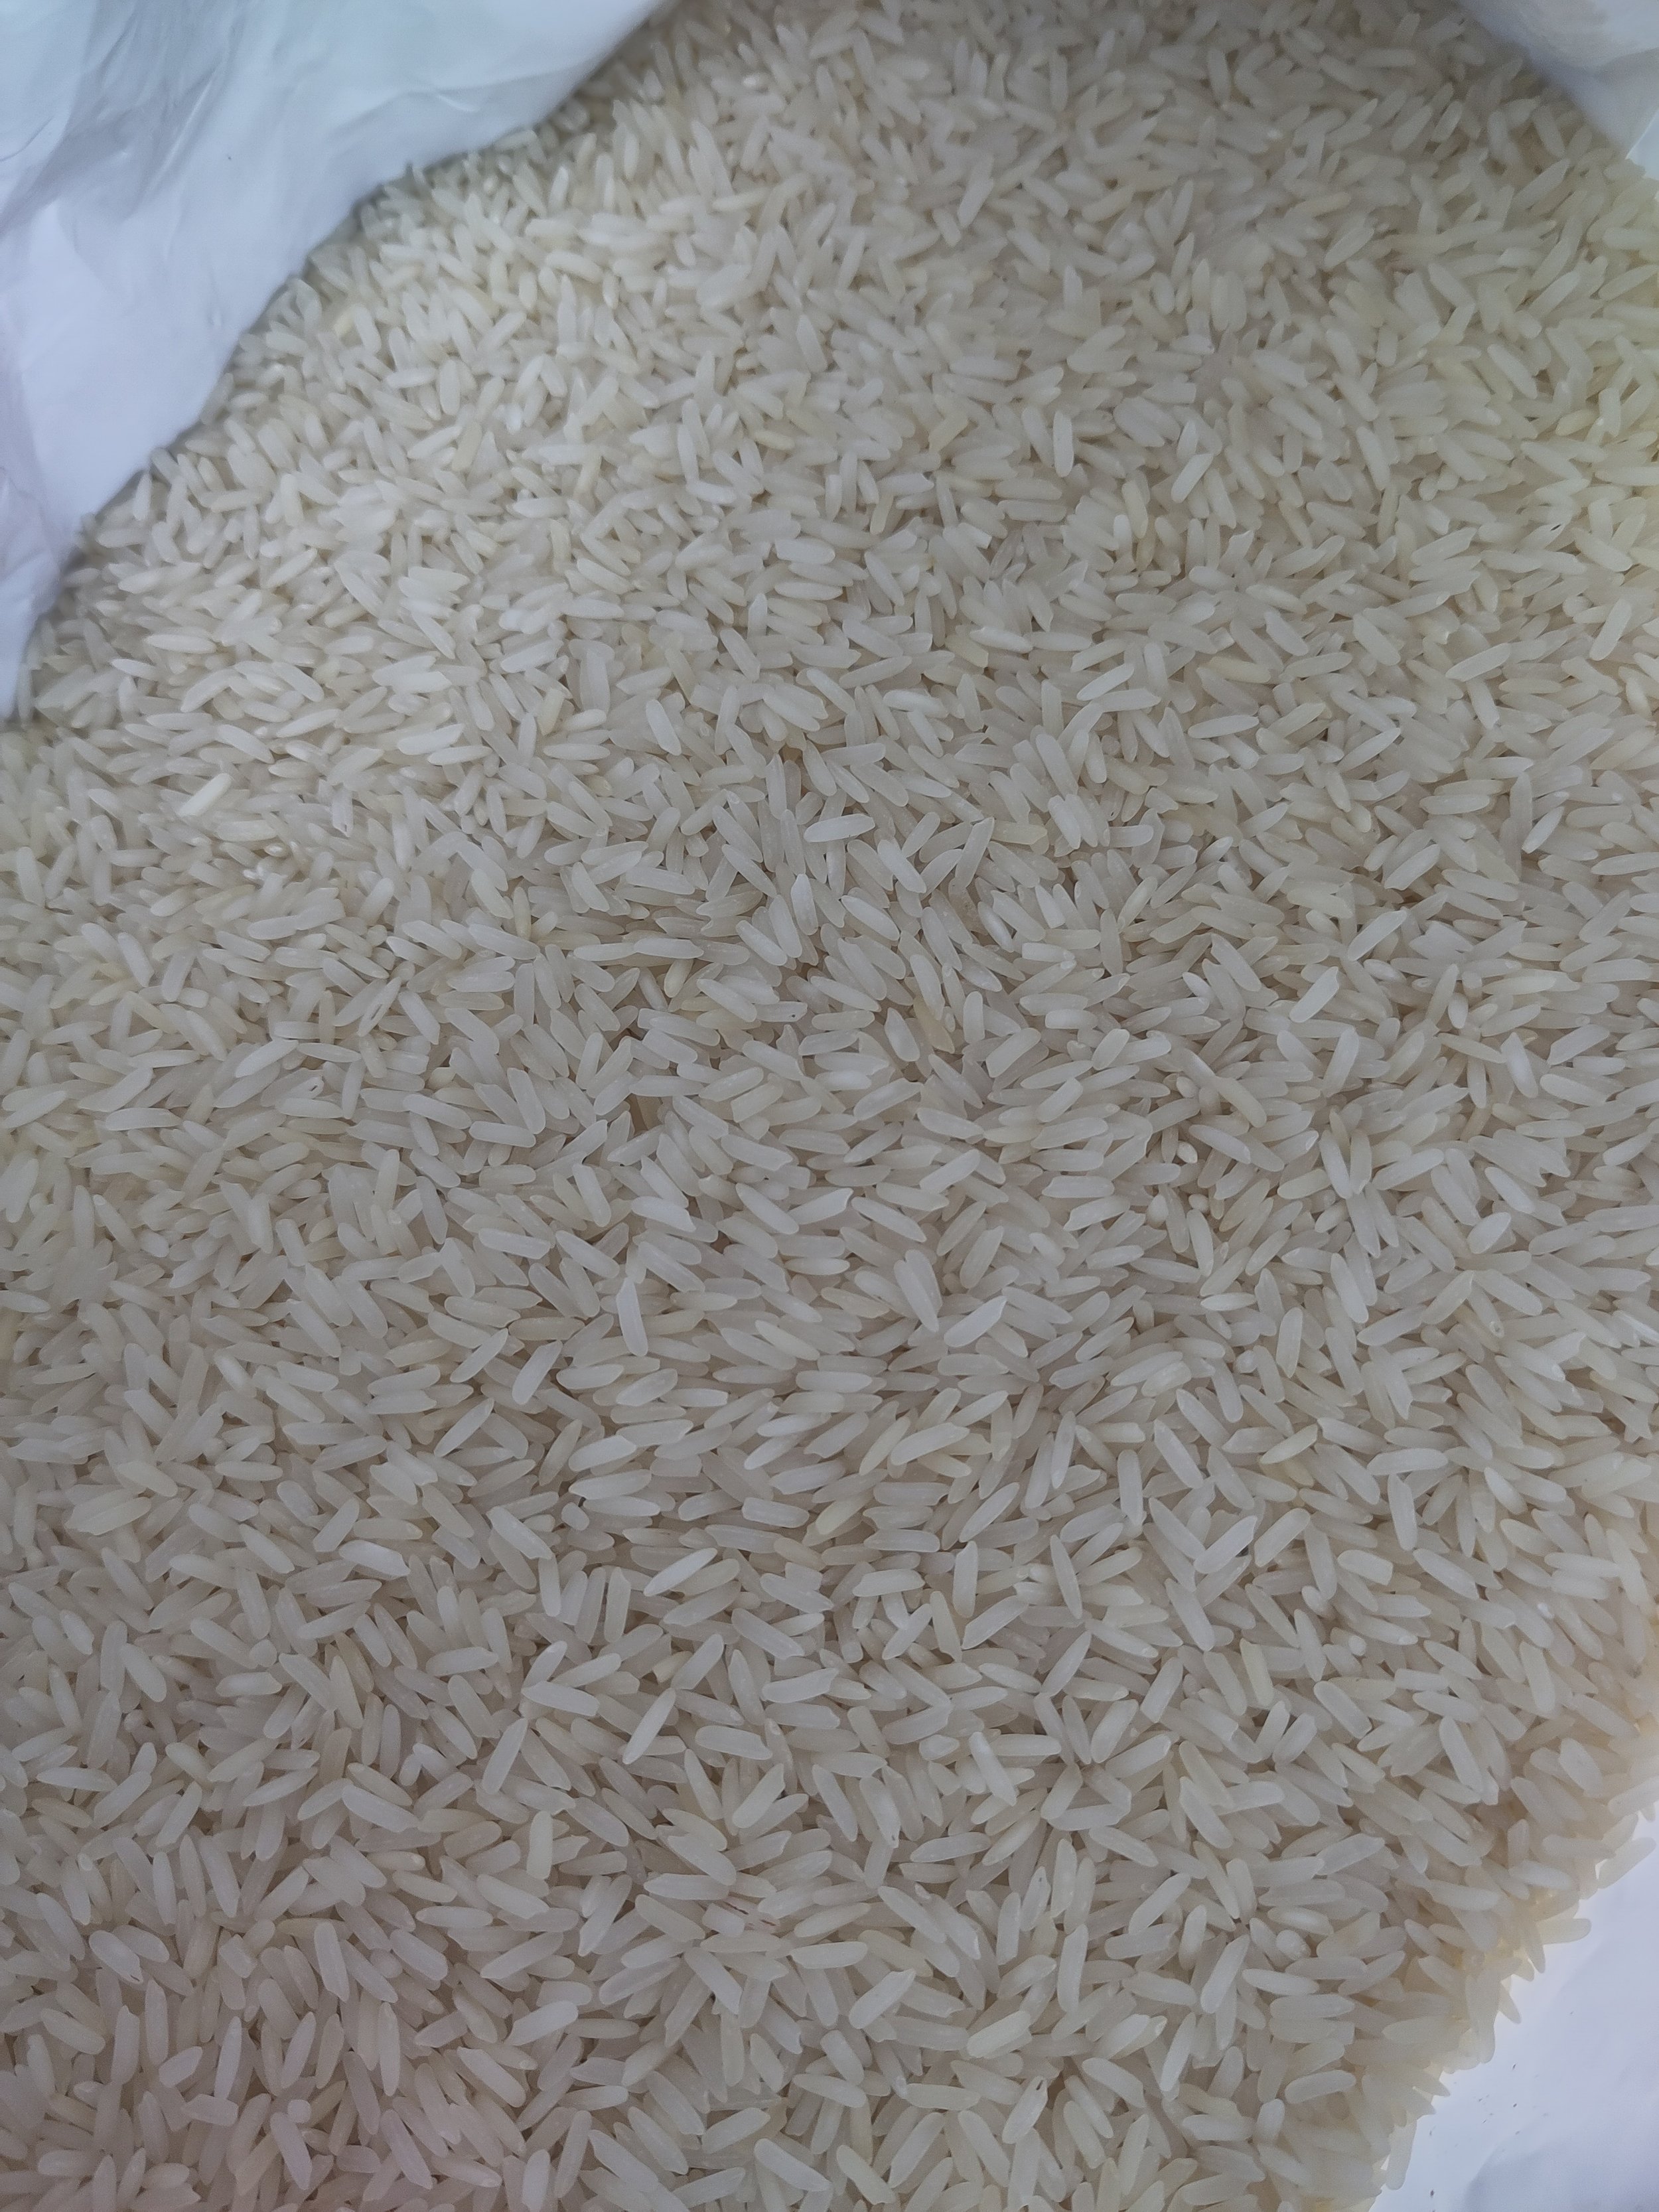 Rice, Grains &amp; Pulses